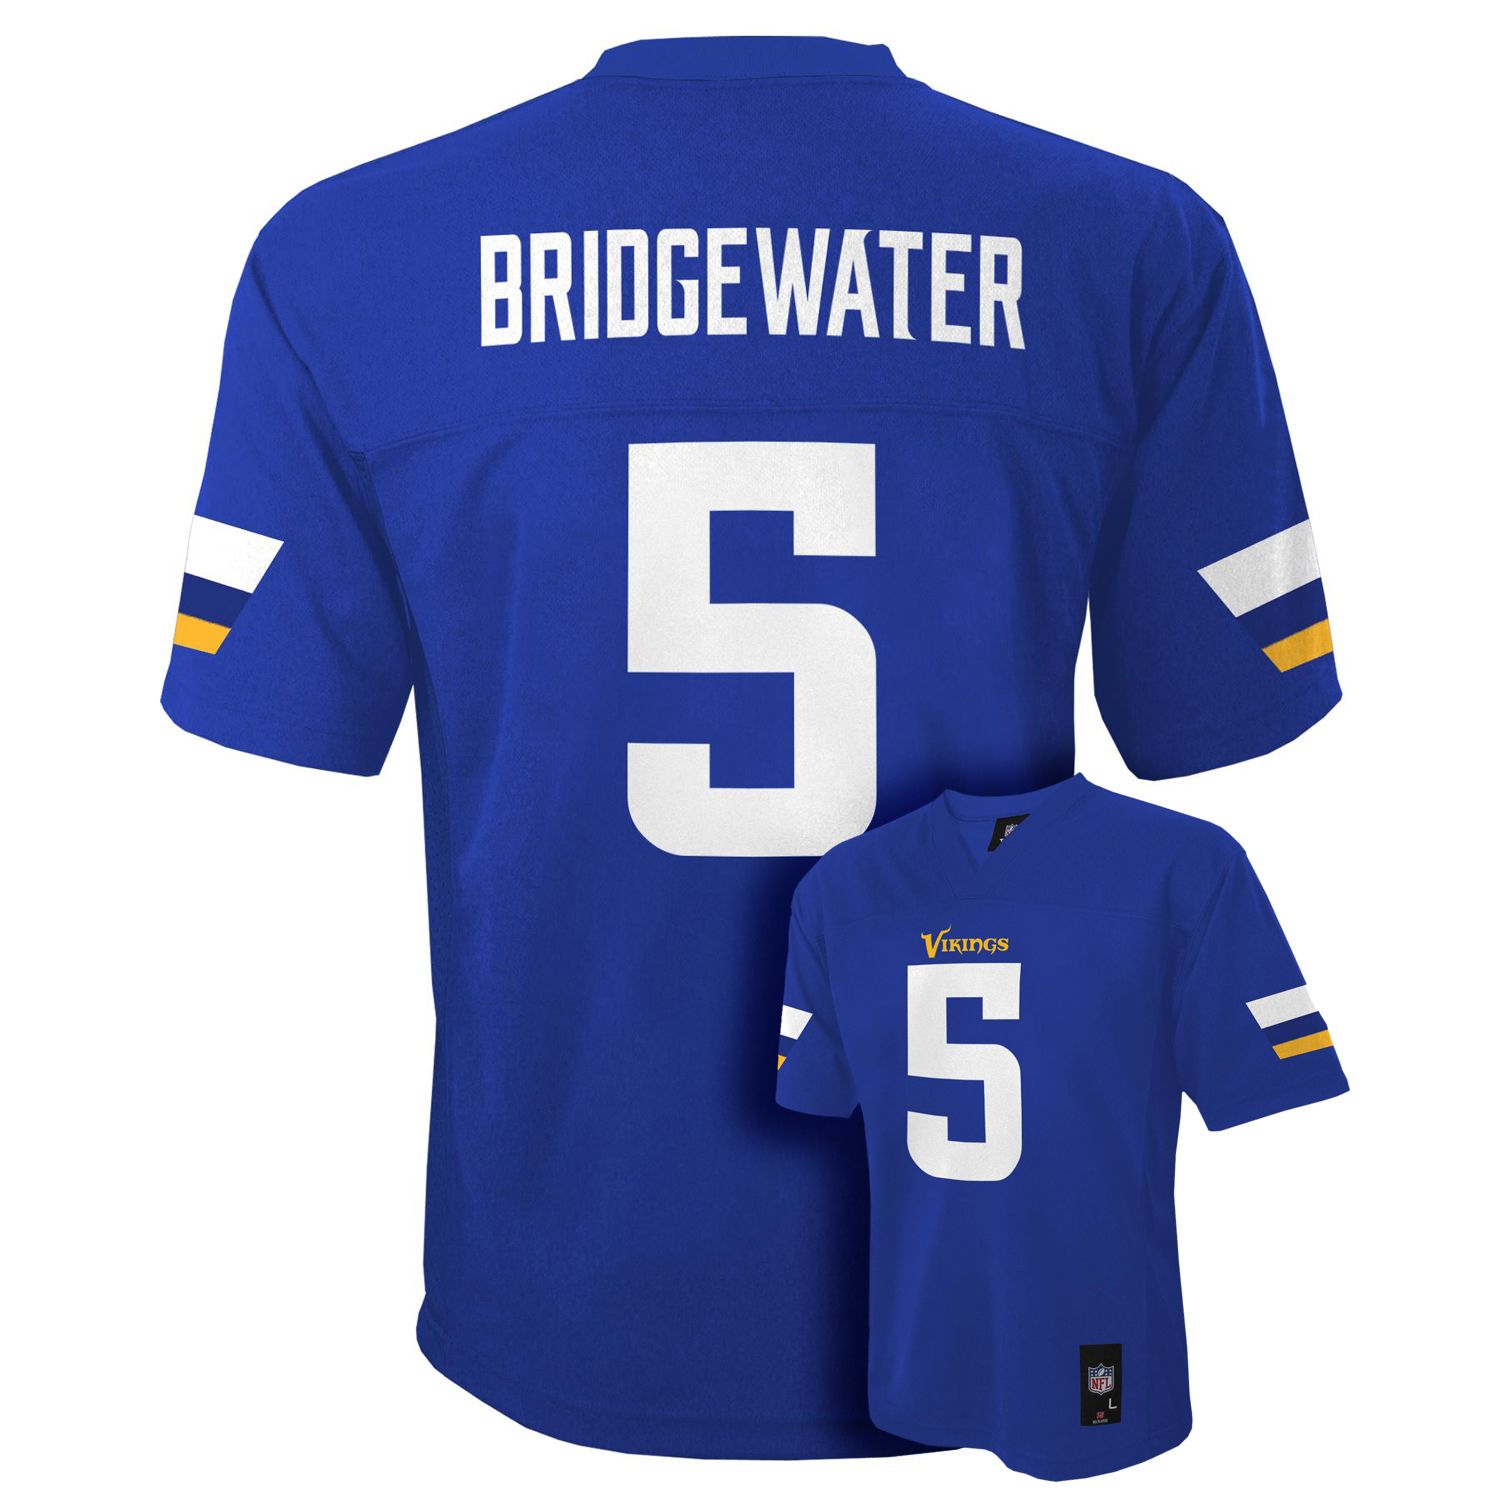 nfl bridgewater jersey